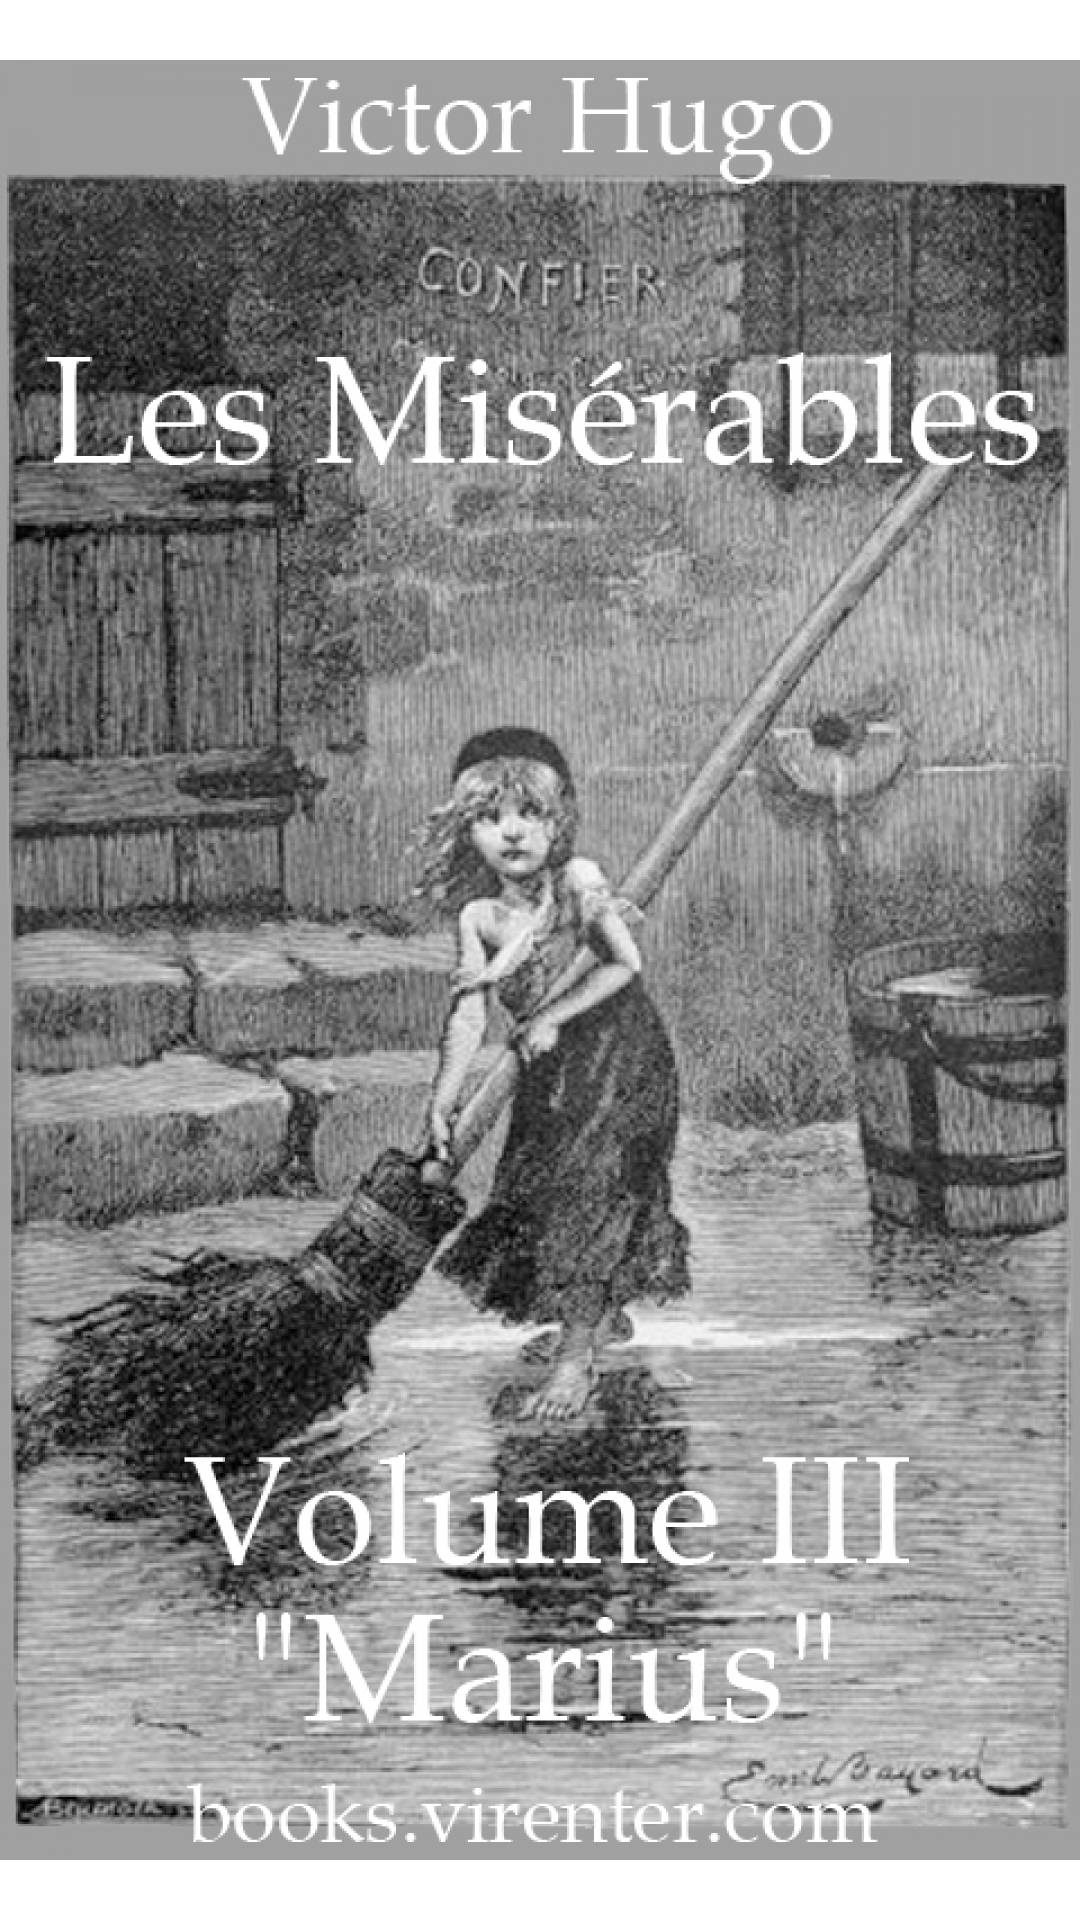 Victor Hugo - Les Misérables, Volume III ('Marius')